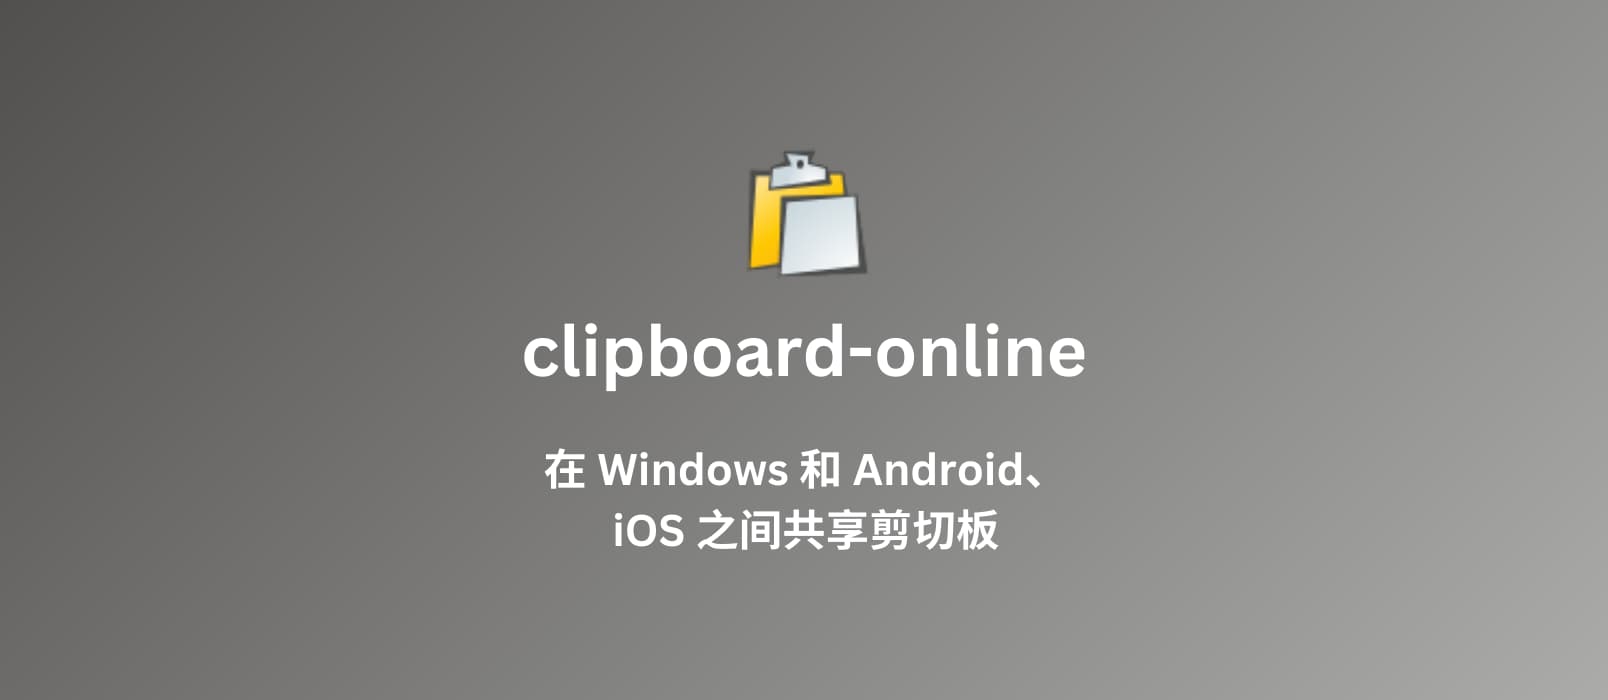 clipboardonline  在 Windows 和 iOS、Android 之间分享剪切板  小众软件